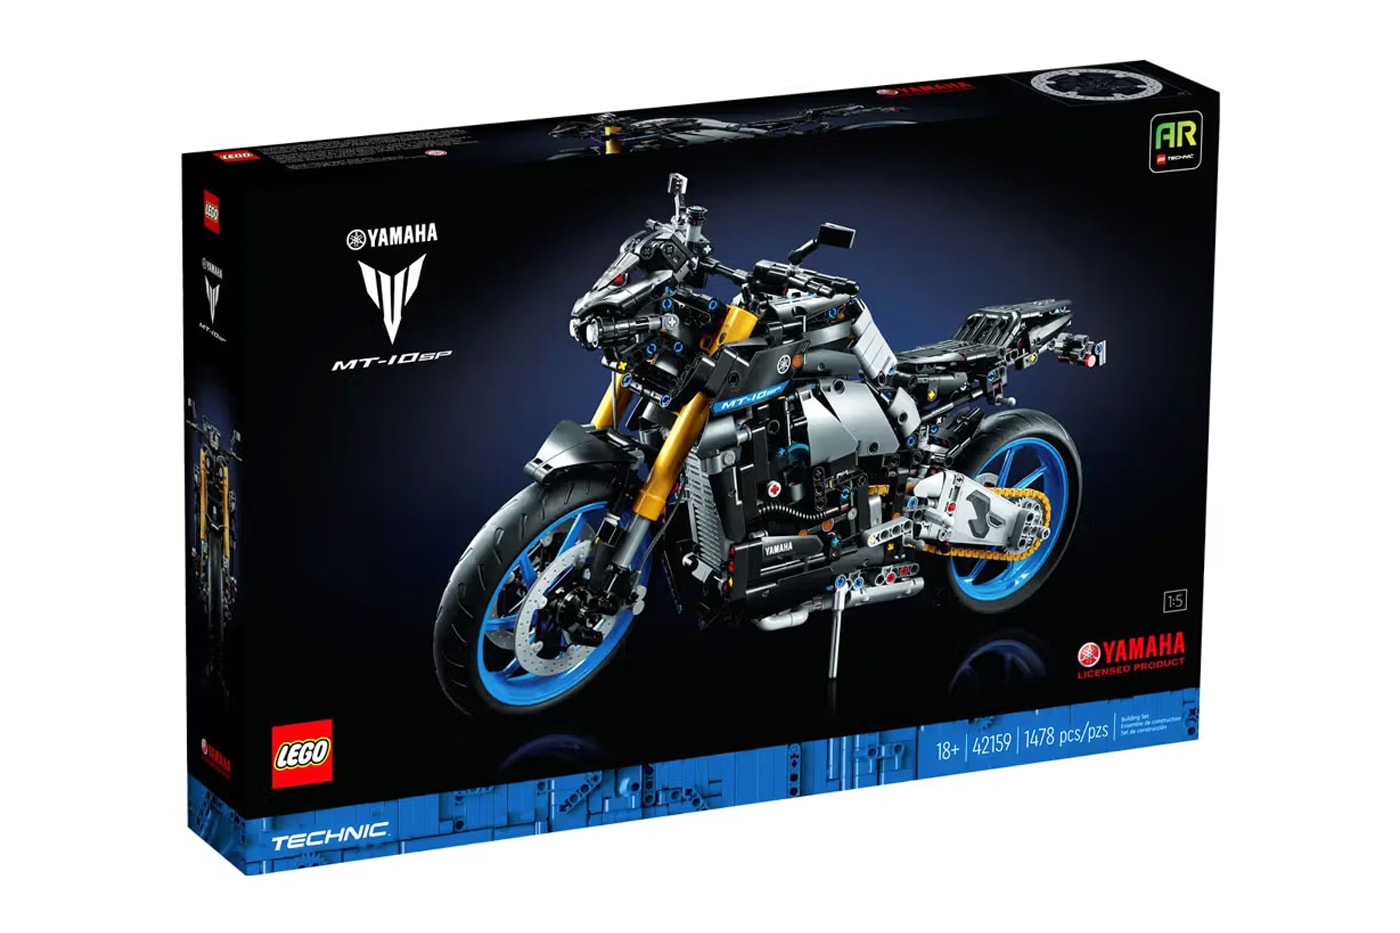 LEGO Technic Presents the Yamaha MT-10 SP 42159 Toys